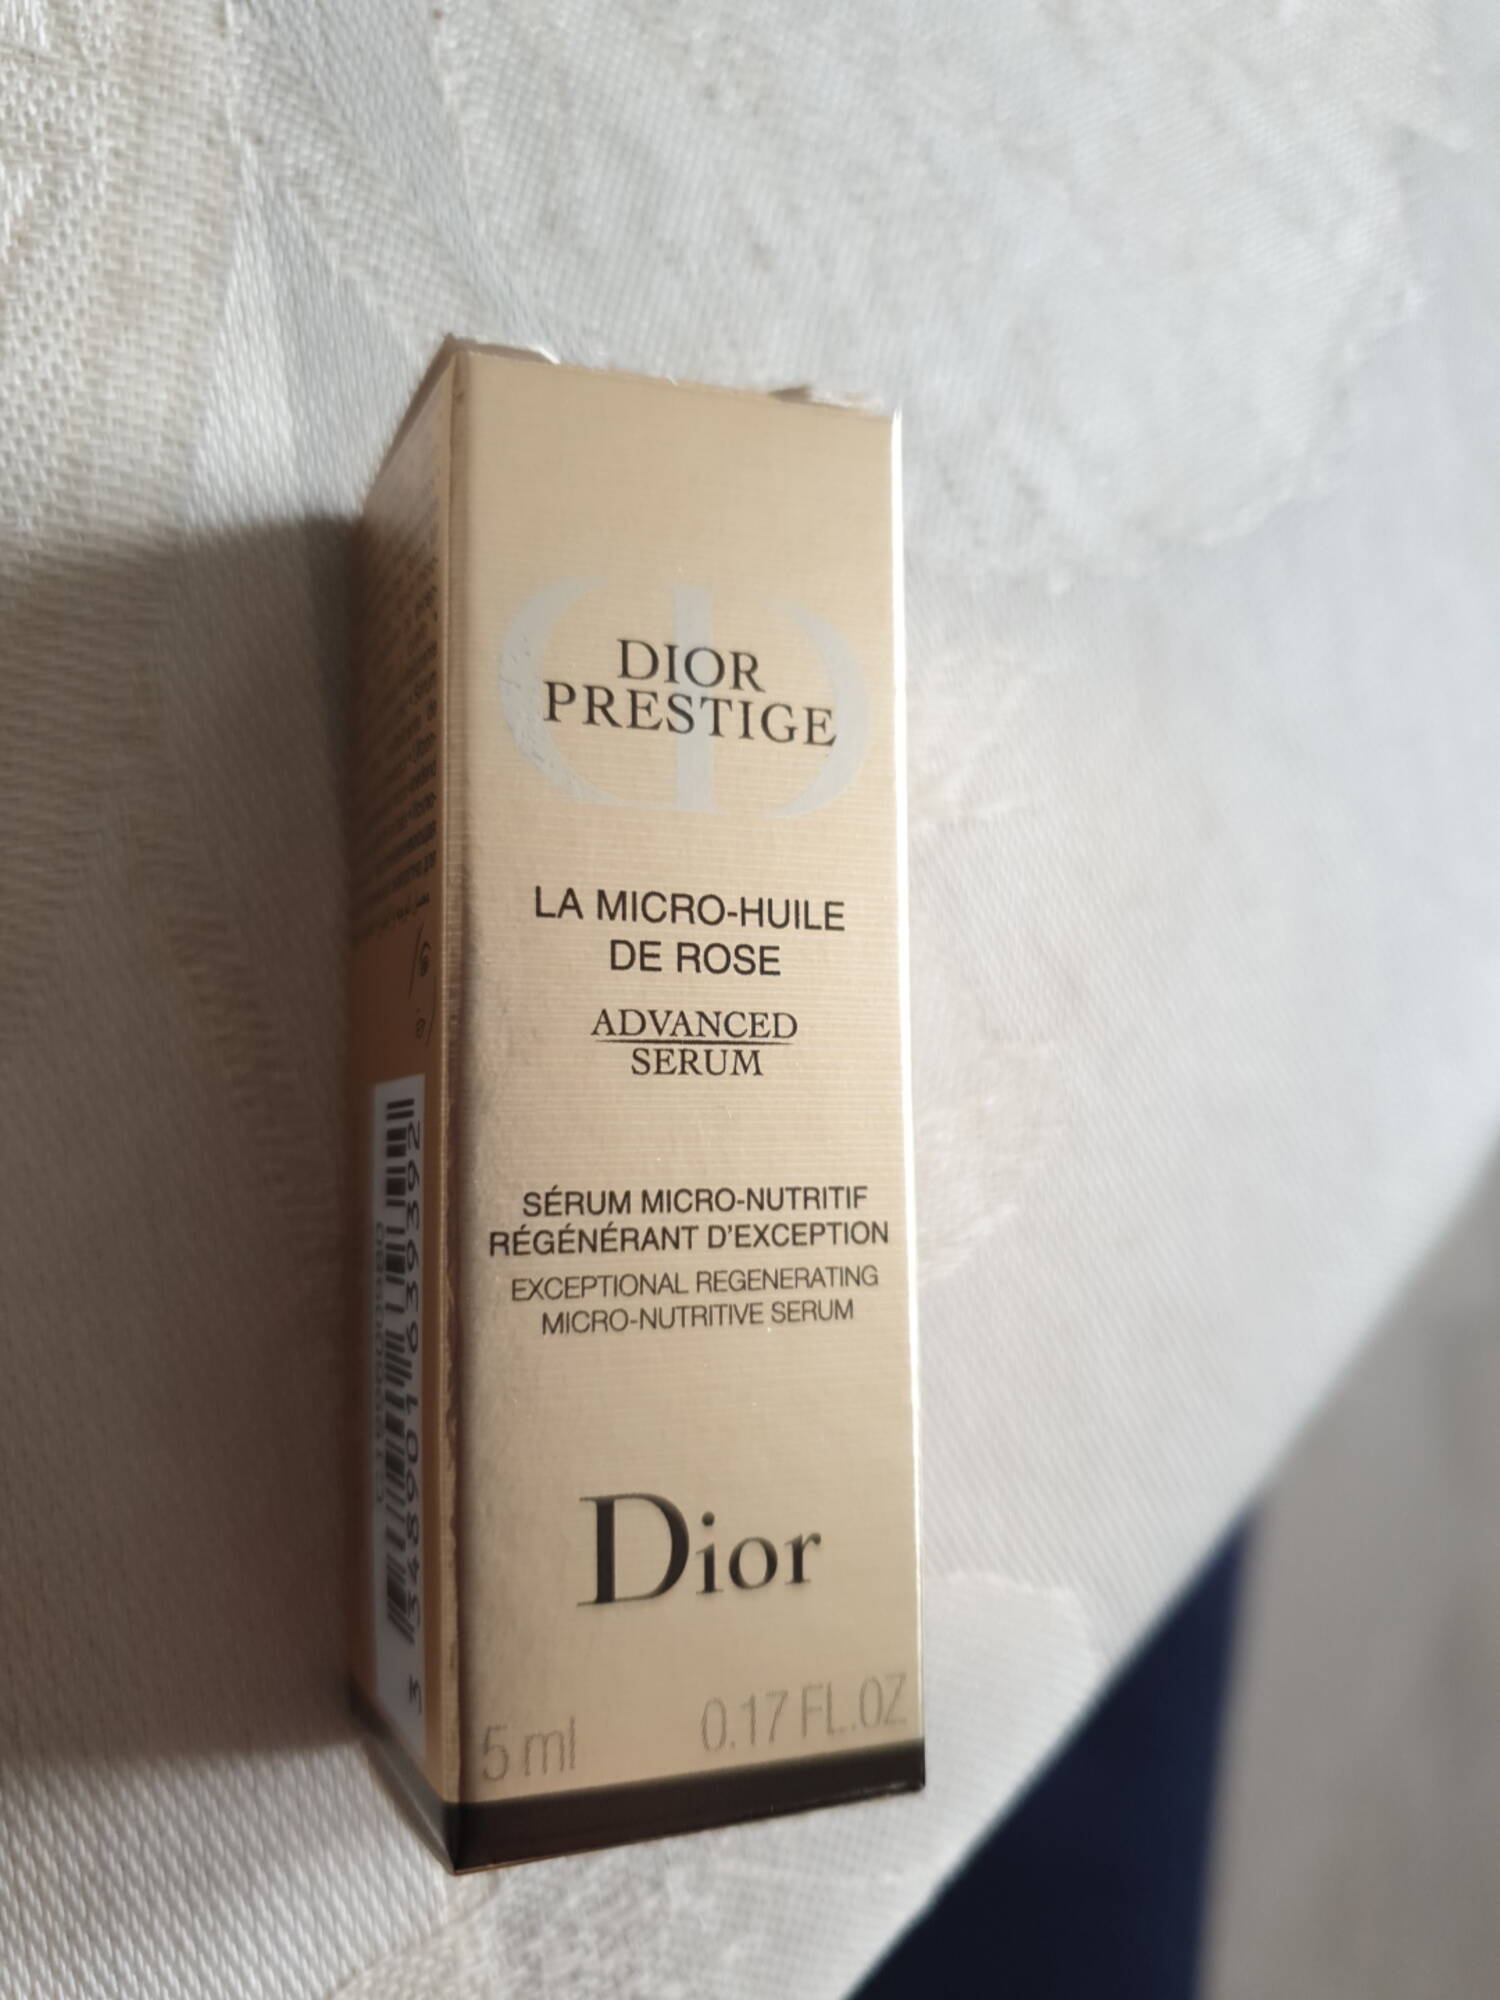 DIOR - Dior prestige - La micro-huile de rose sérum régénérant